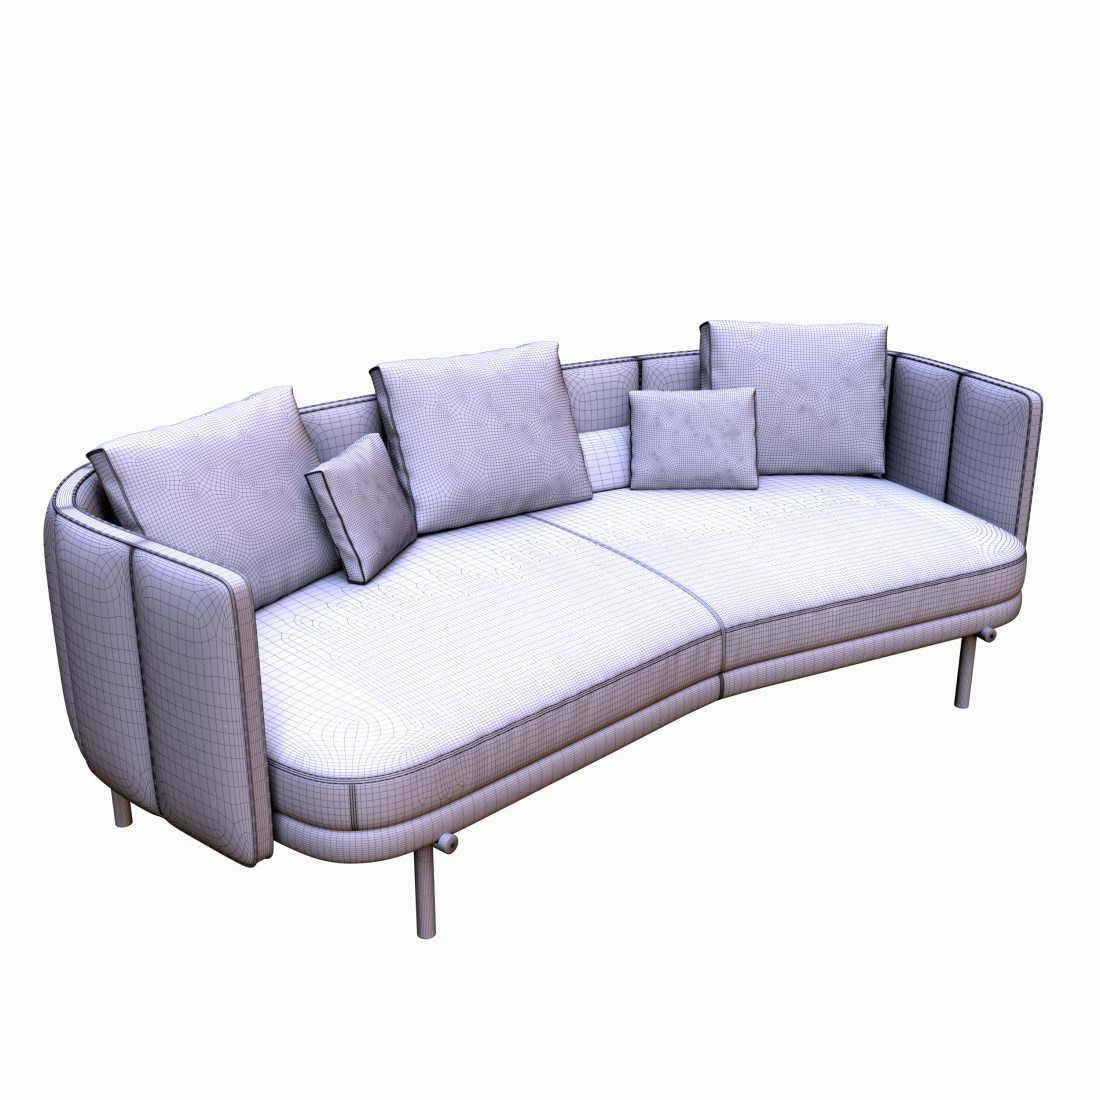 Minotti 3D 3ds max Render corona vray 3dmodeling furniture